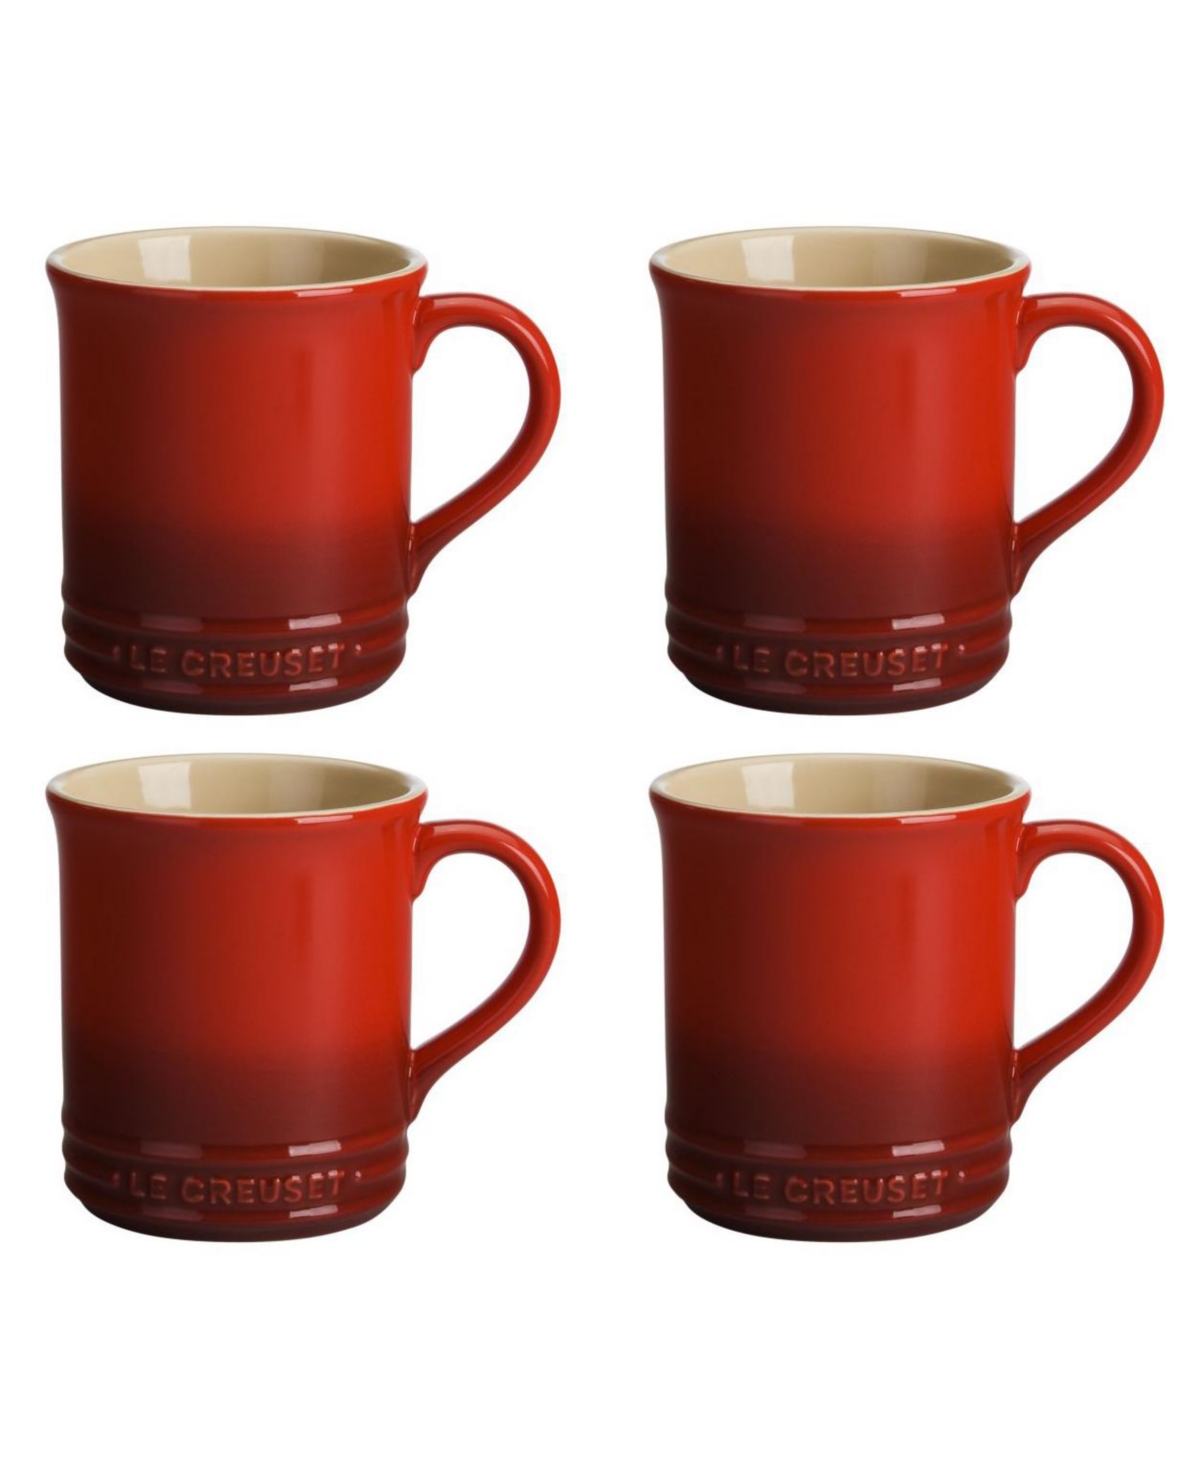 14 oz. Stoneware Set of Four Coffee Mugs - Shallot